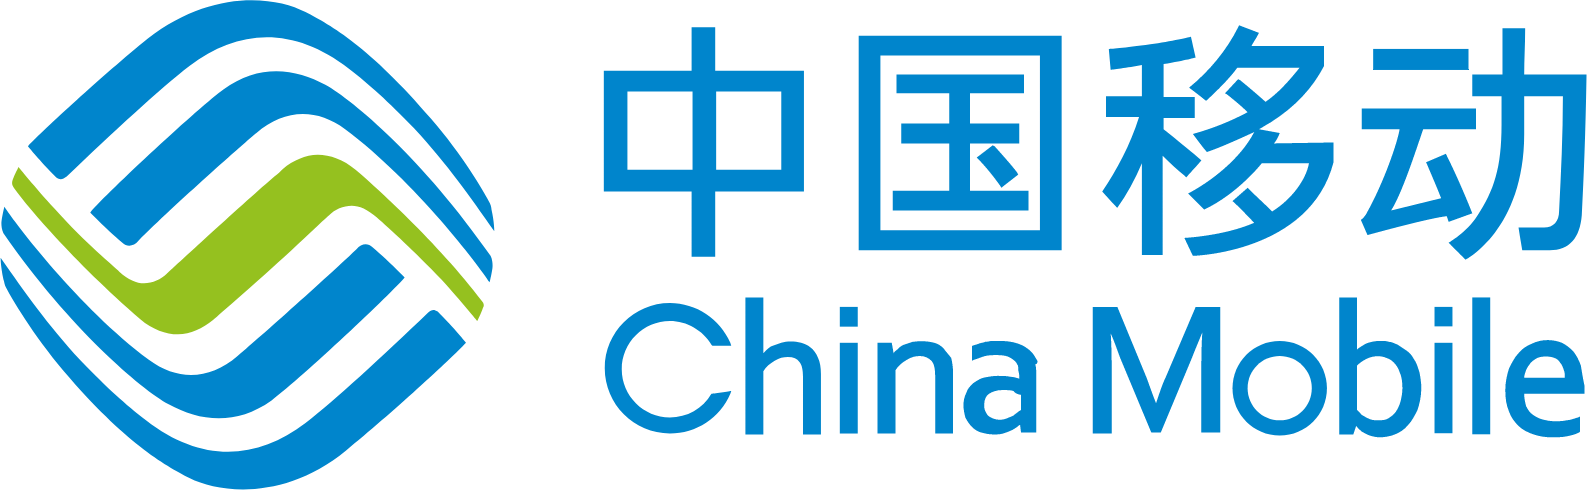 China Mobile logo large (transparent PNG)